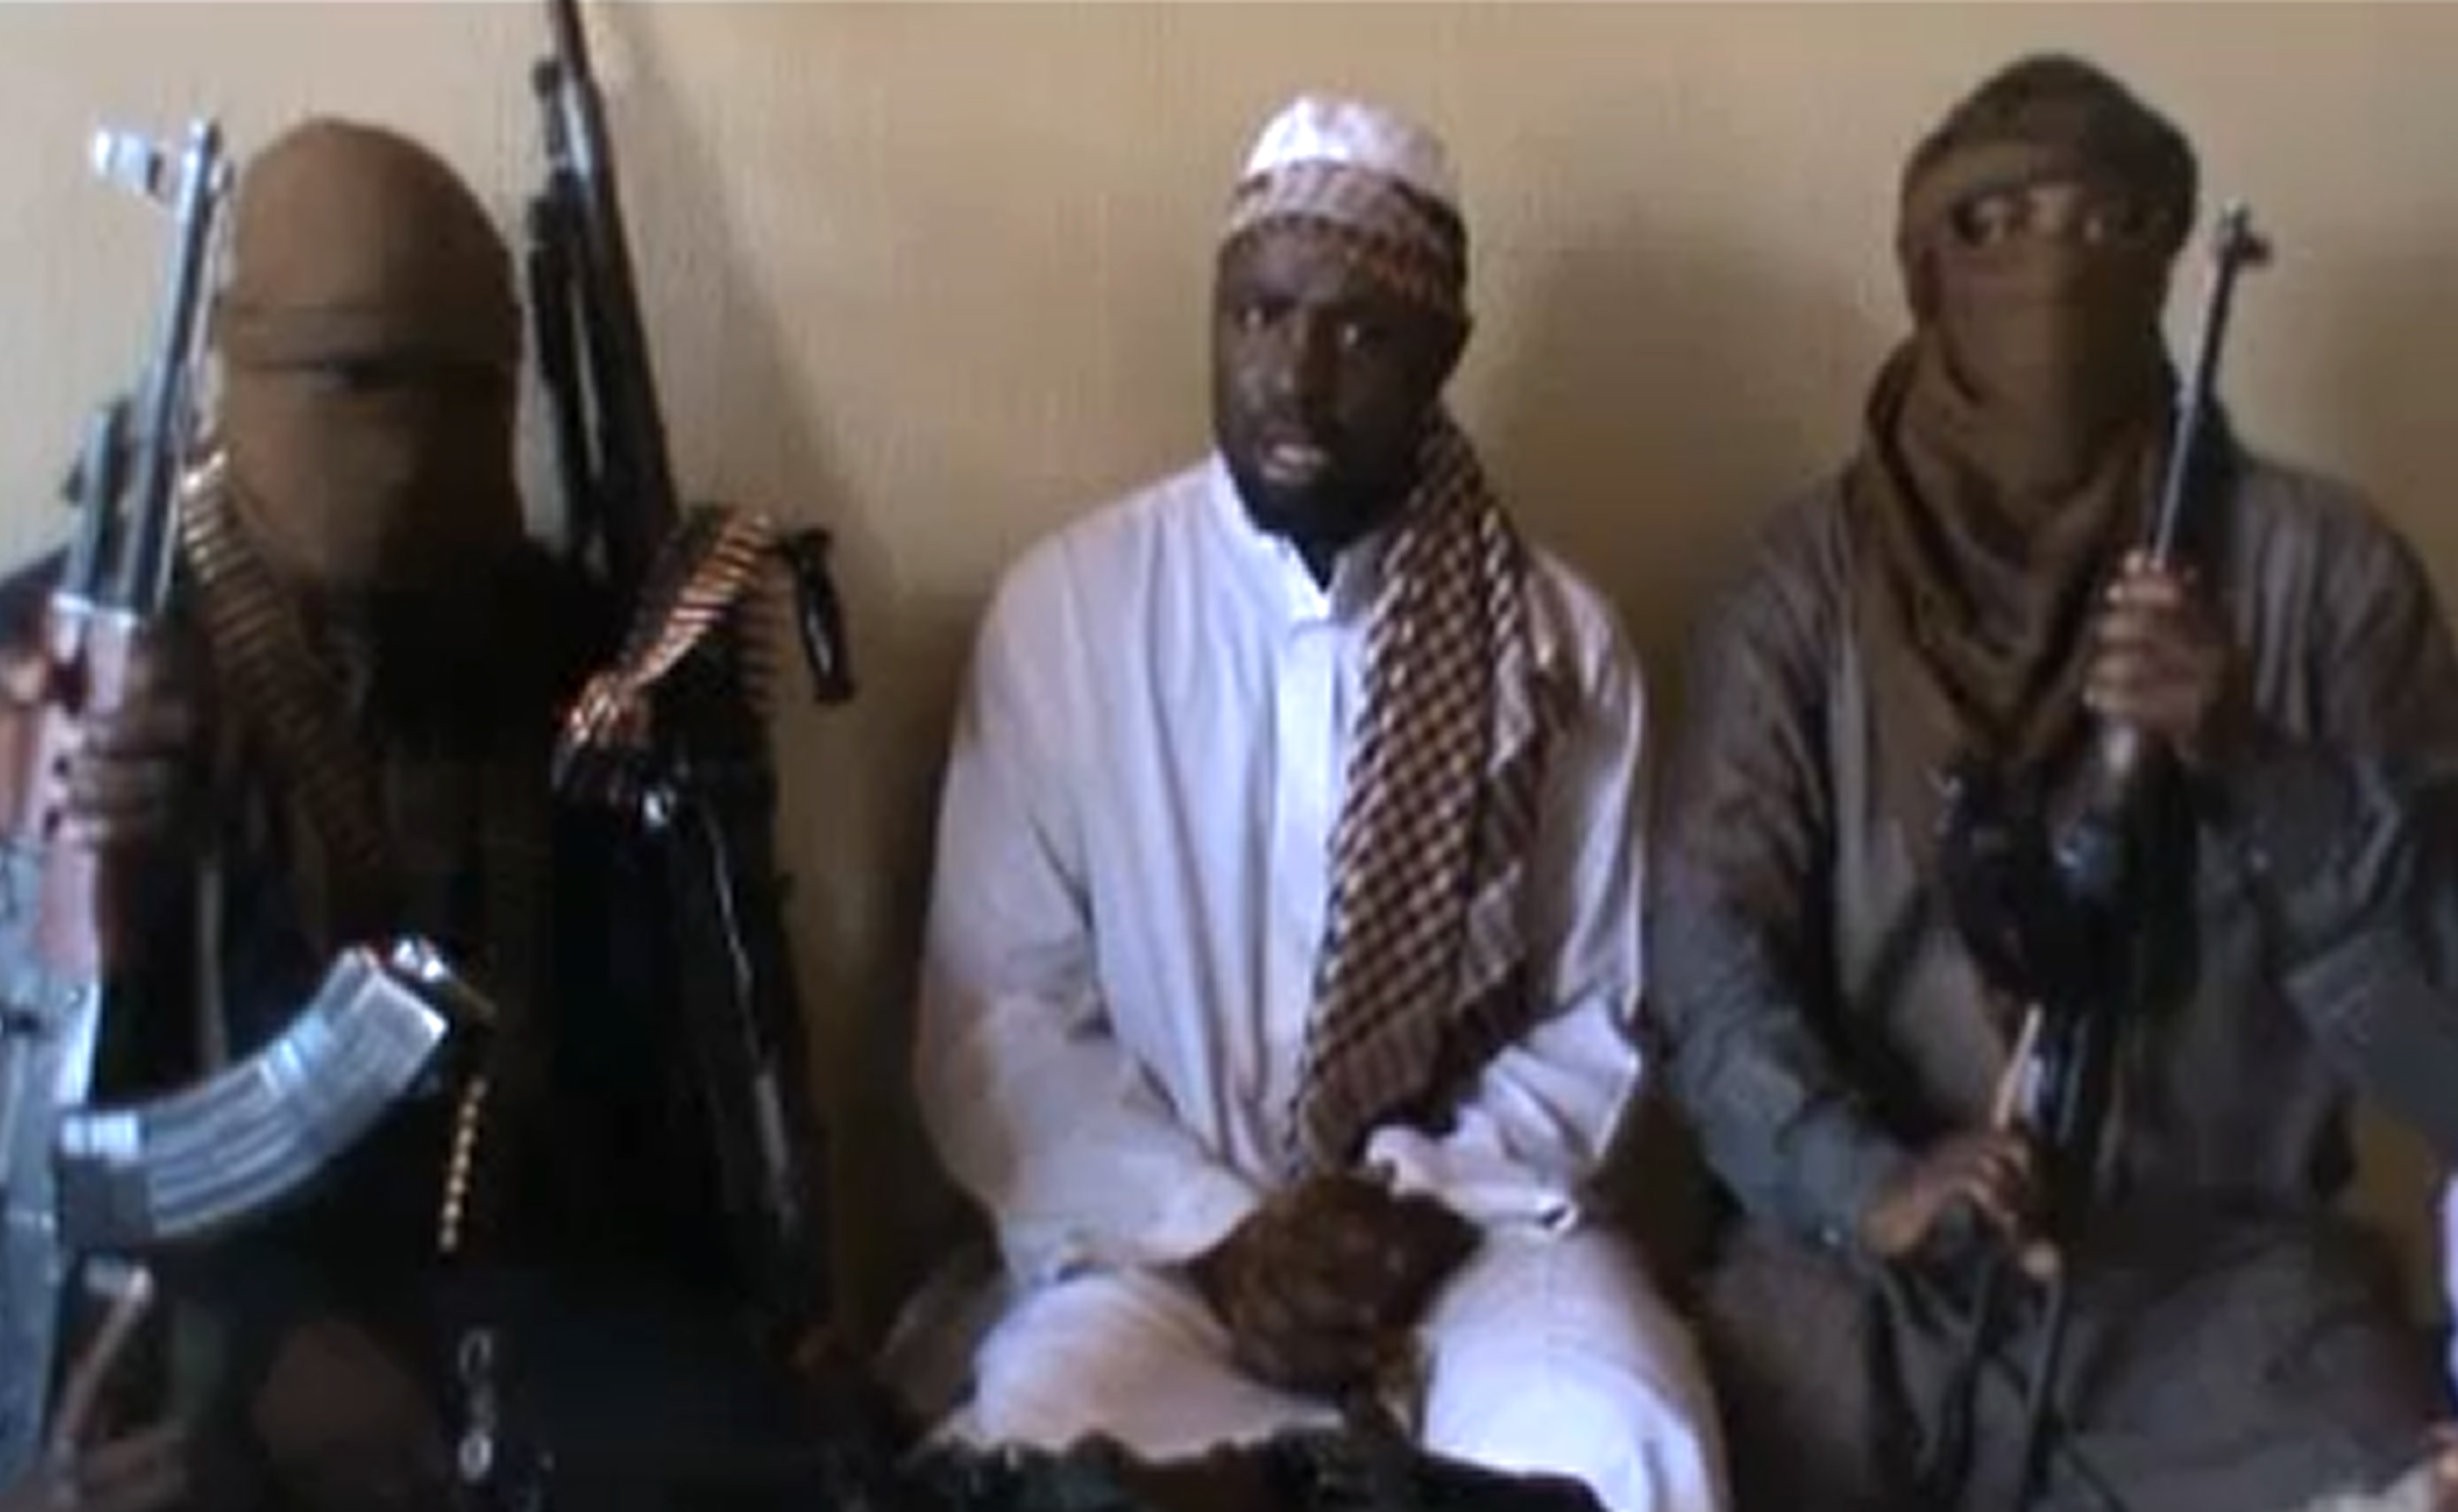 Nuovo massacro dei sanguinari Boko Haram in Nigeria, 51 morti, 300 case bruciate